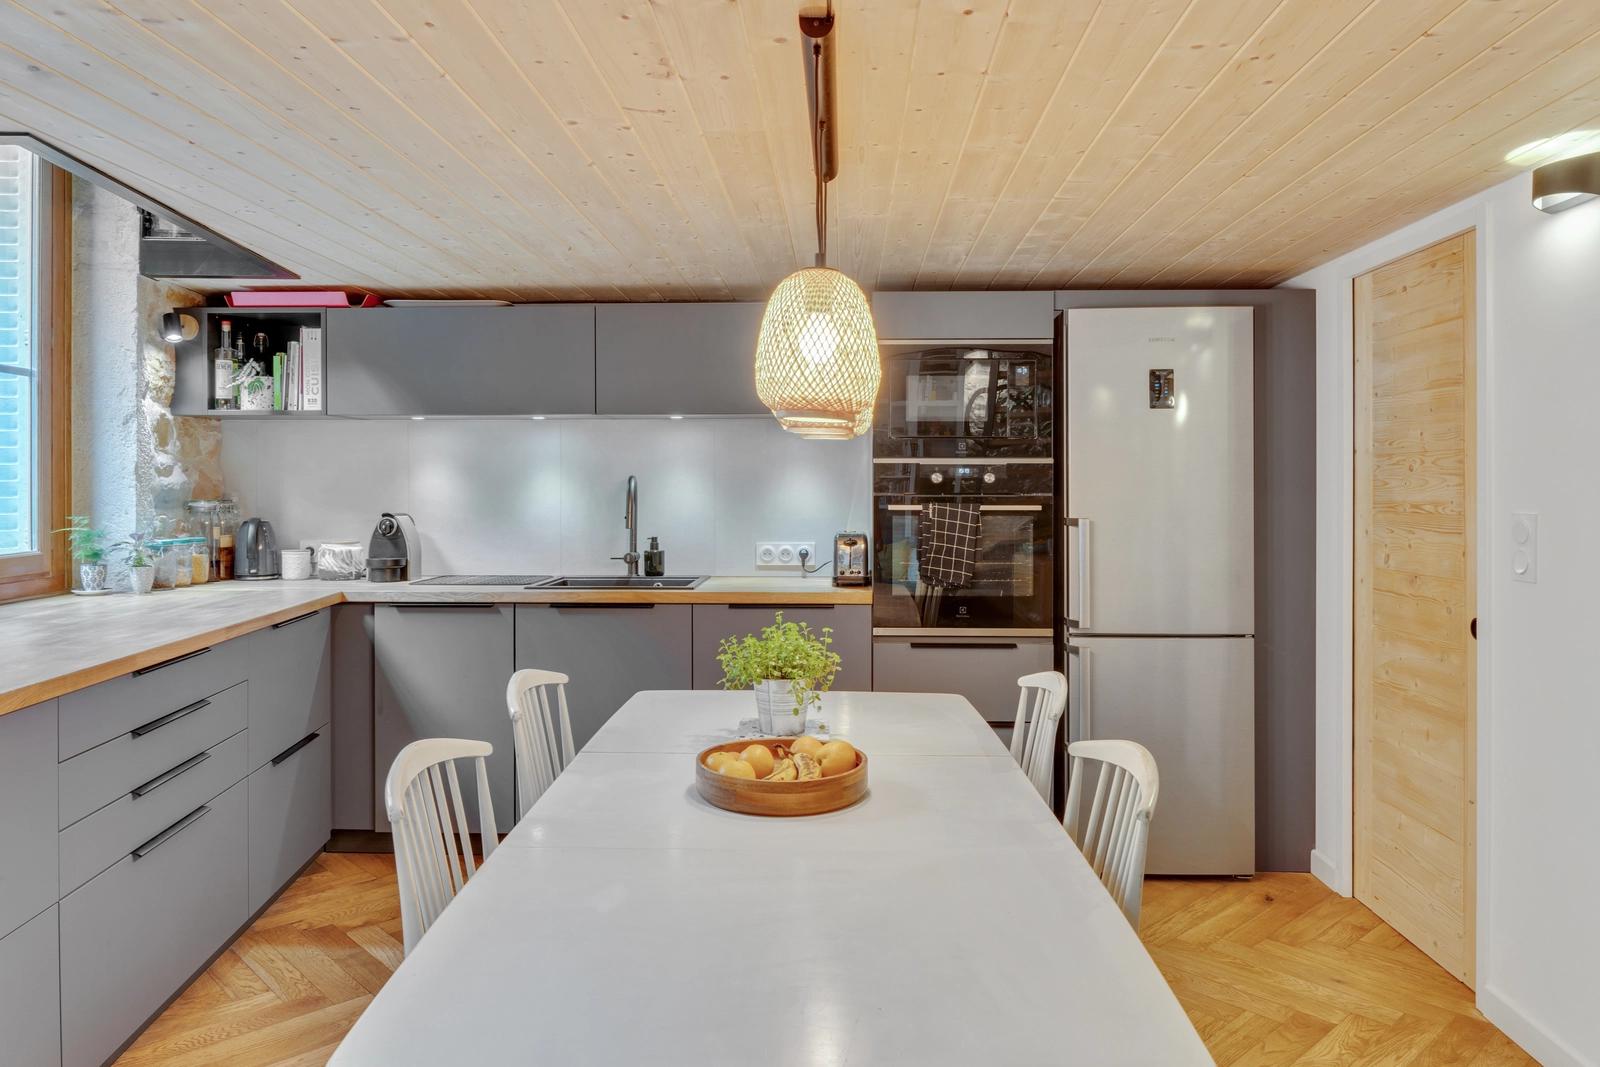 Kitchen in Appart Lyonnais Canut artist studio atmosphere - 6